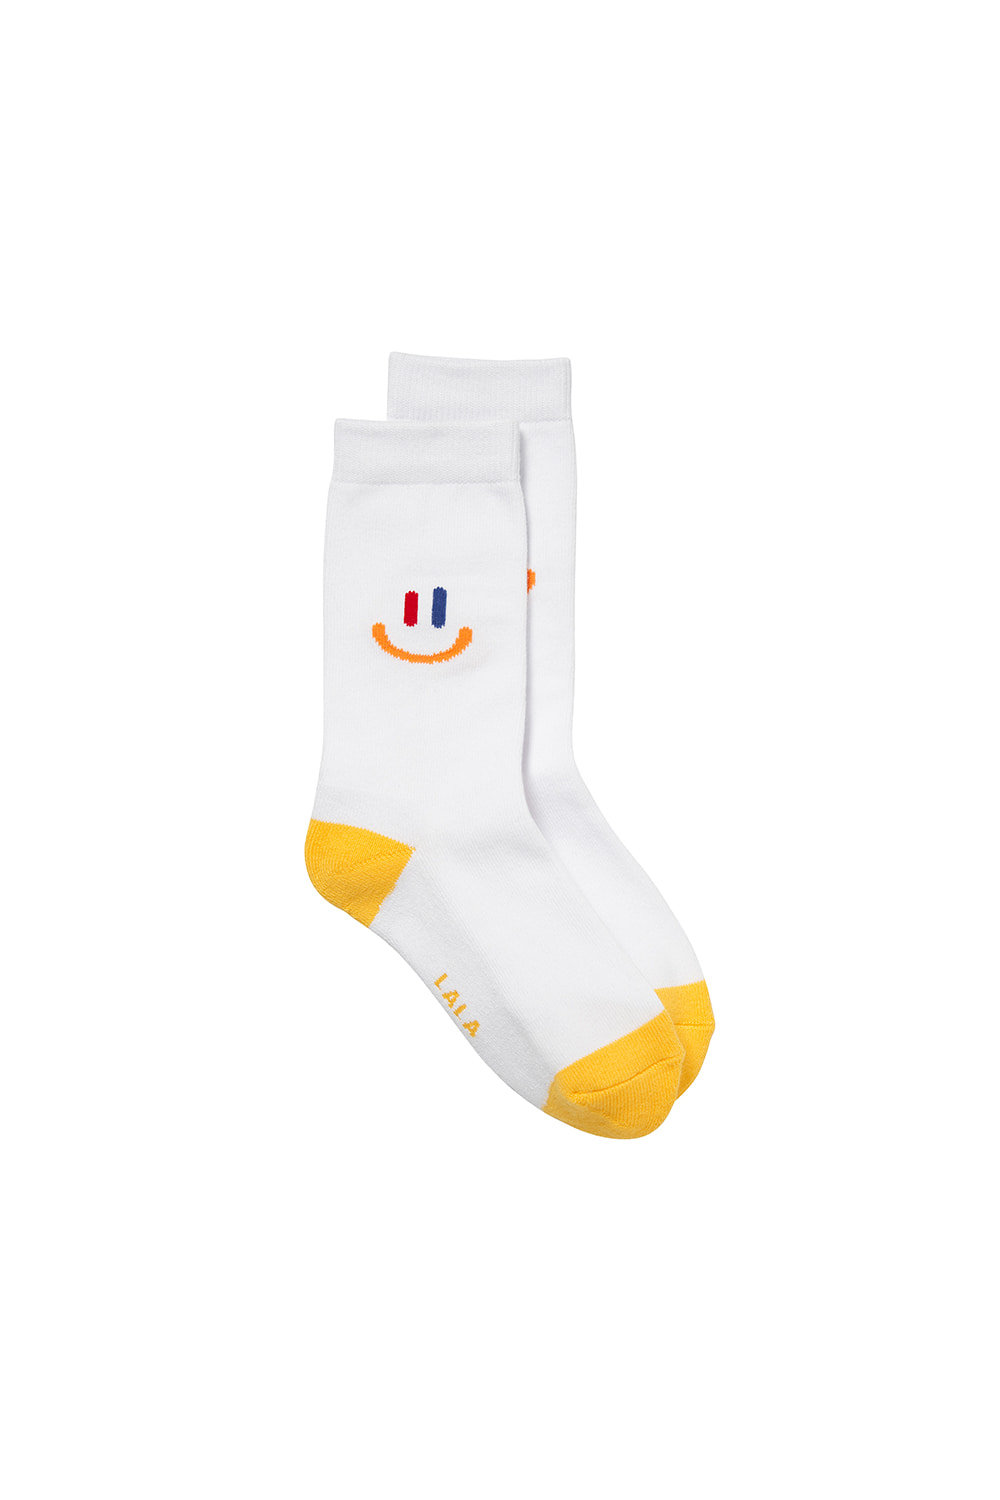 LaLa New Socks [White/Yellow]